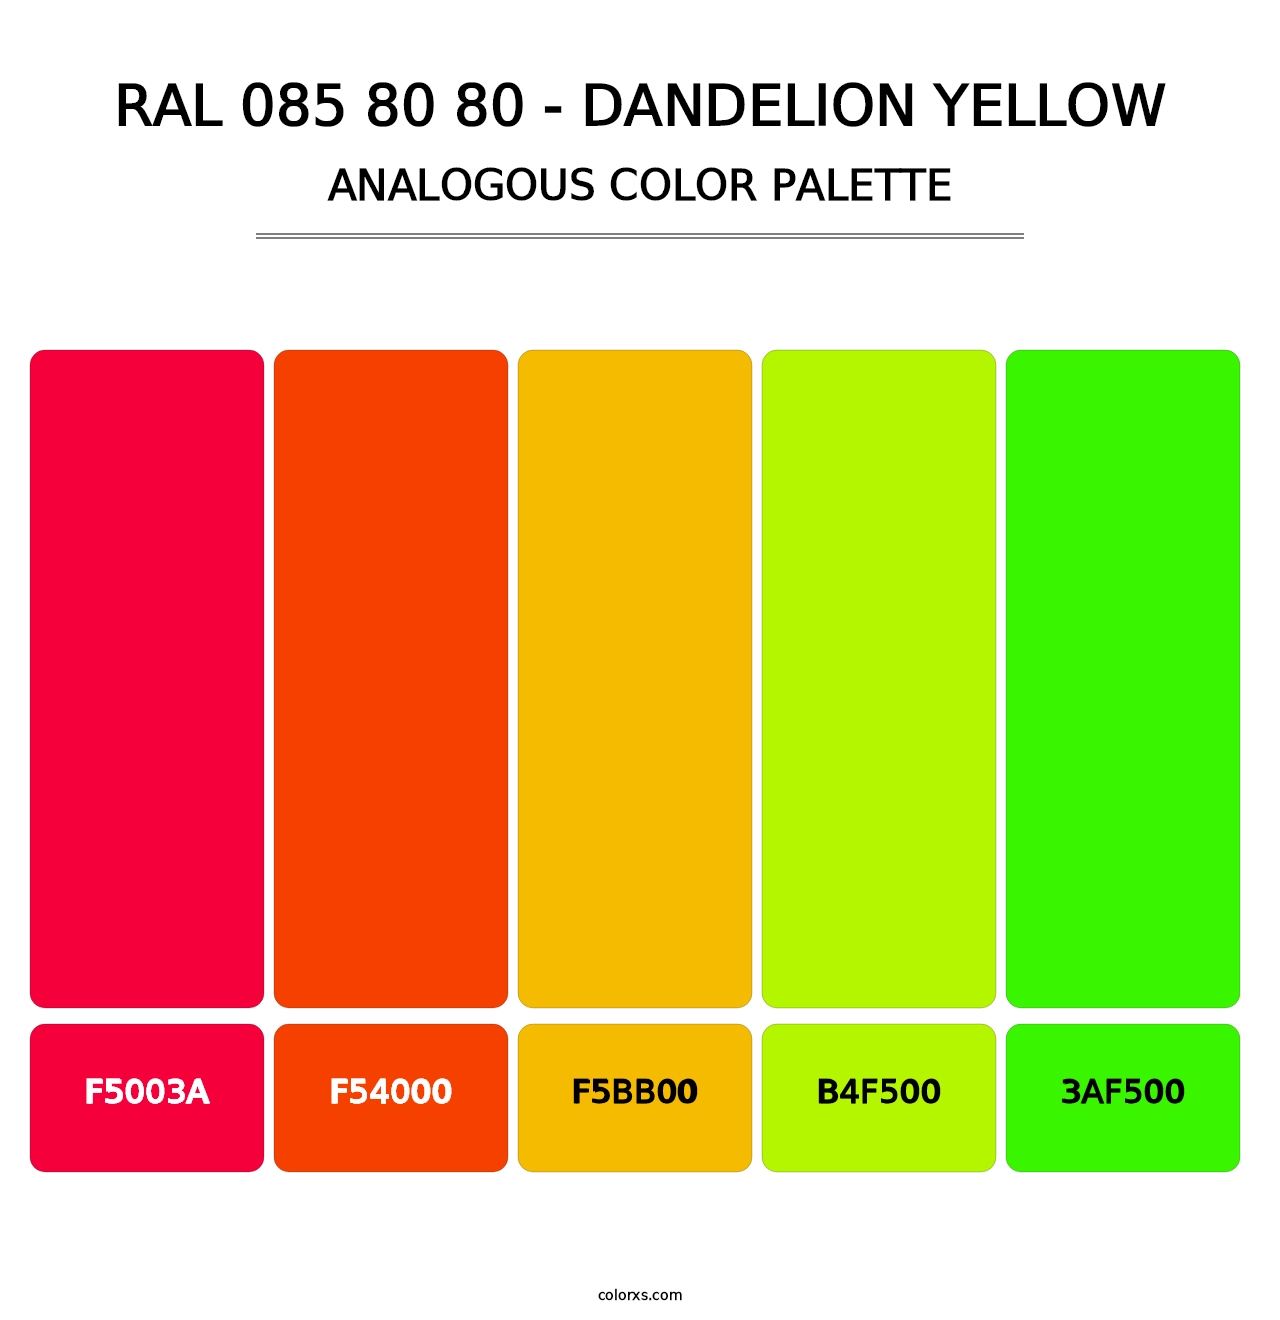 RAL 085 80 80 - Dandelion Yellow - Analogous Color Palette